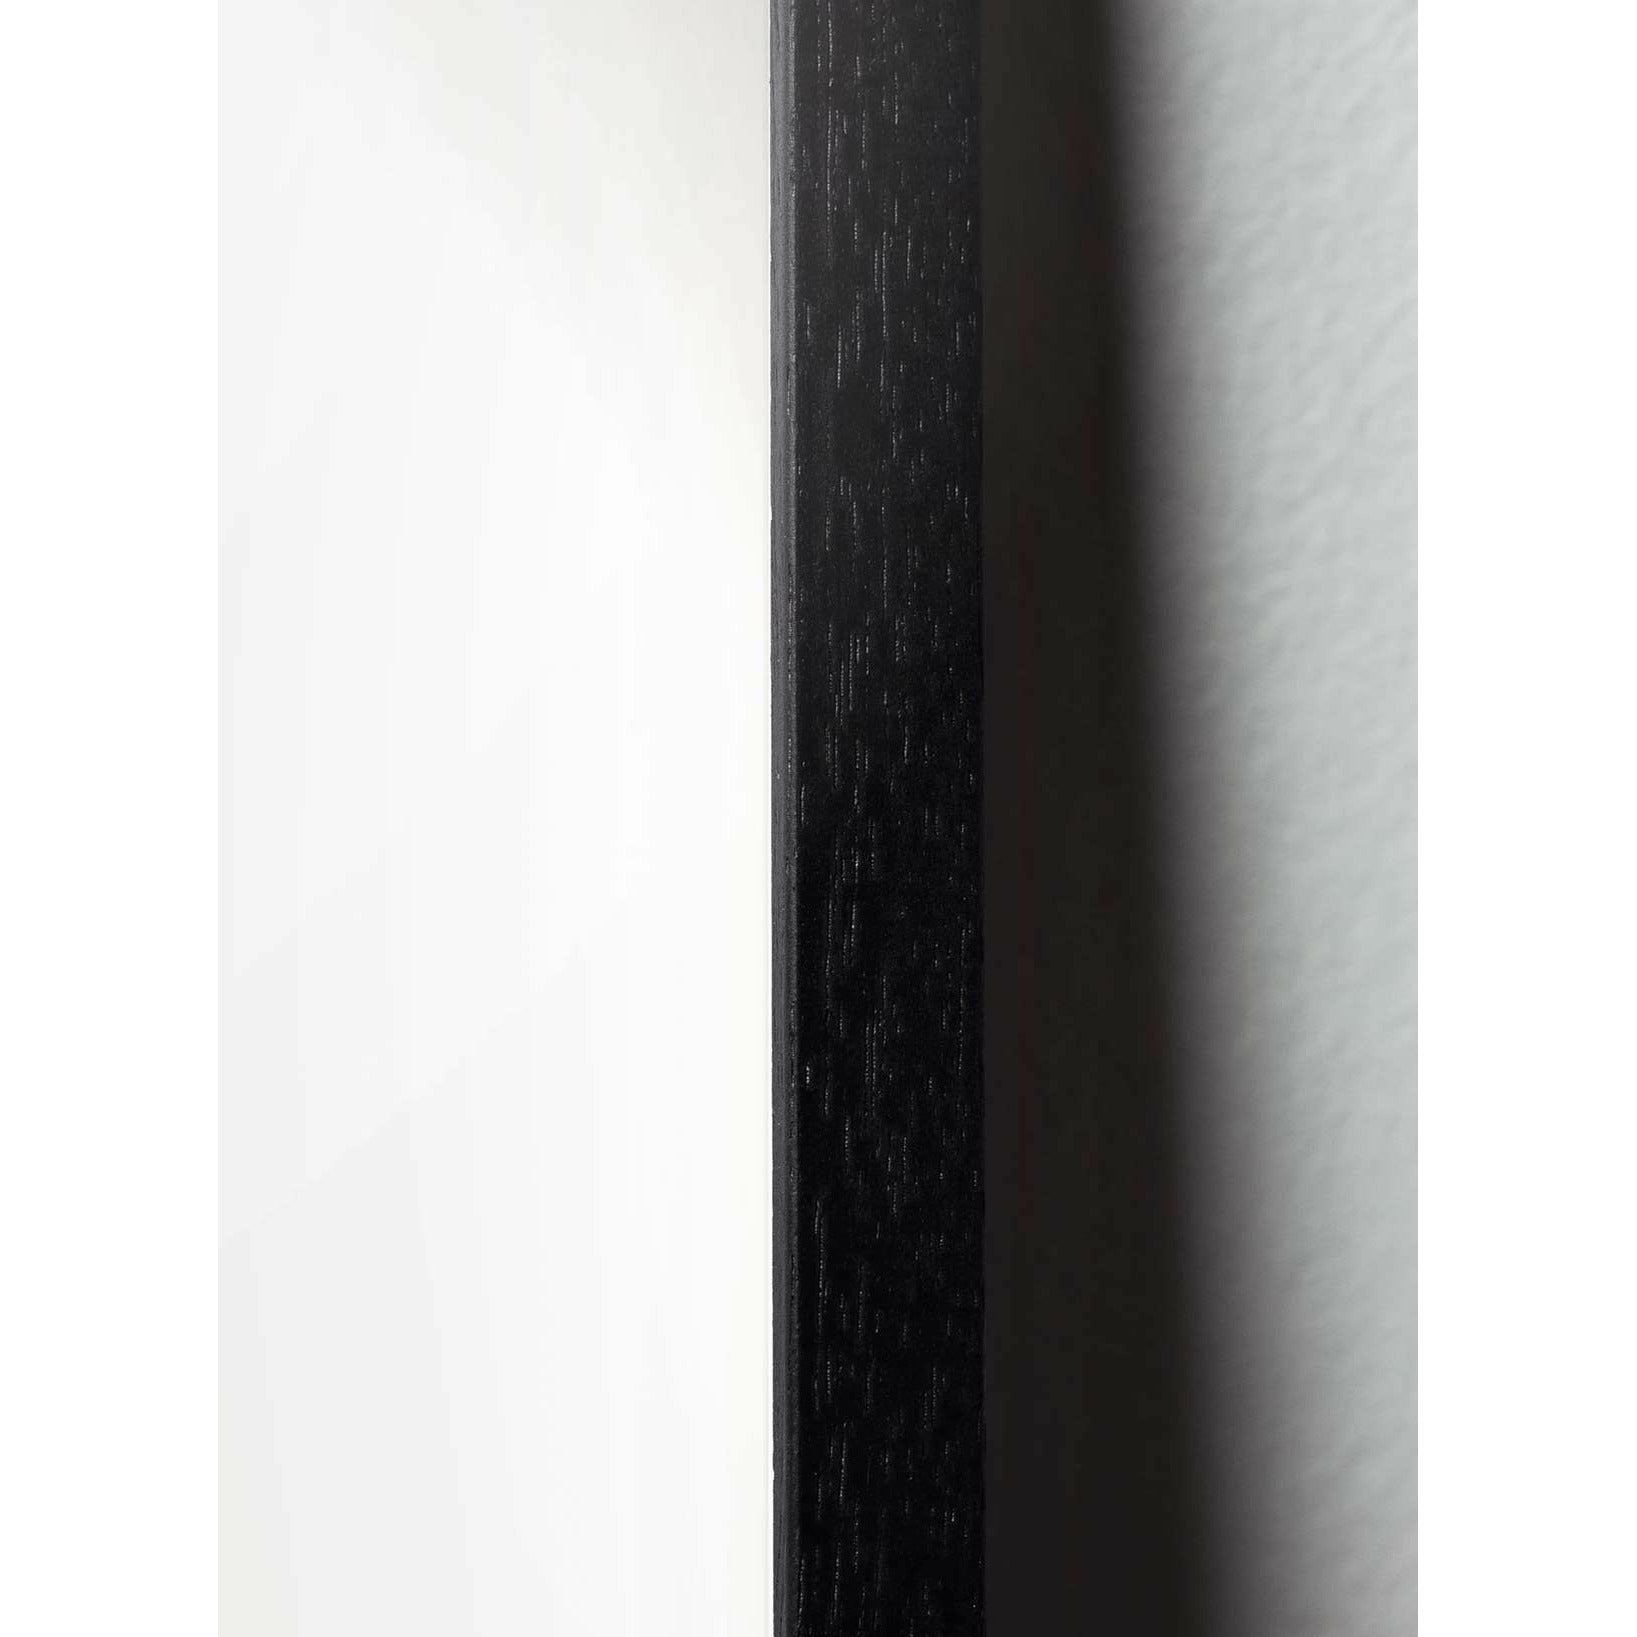 Brainchild Swan Parade Poster, Rahmen aus schwarz lackiertem Holz, A5